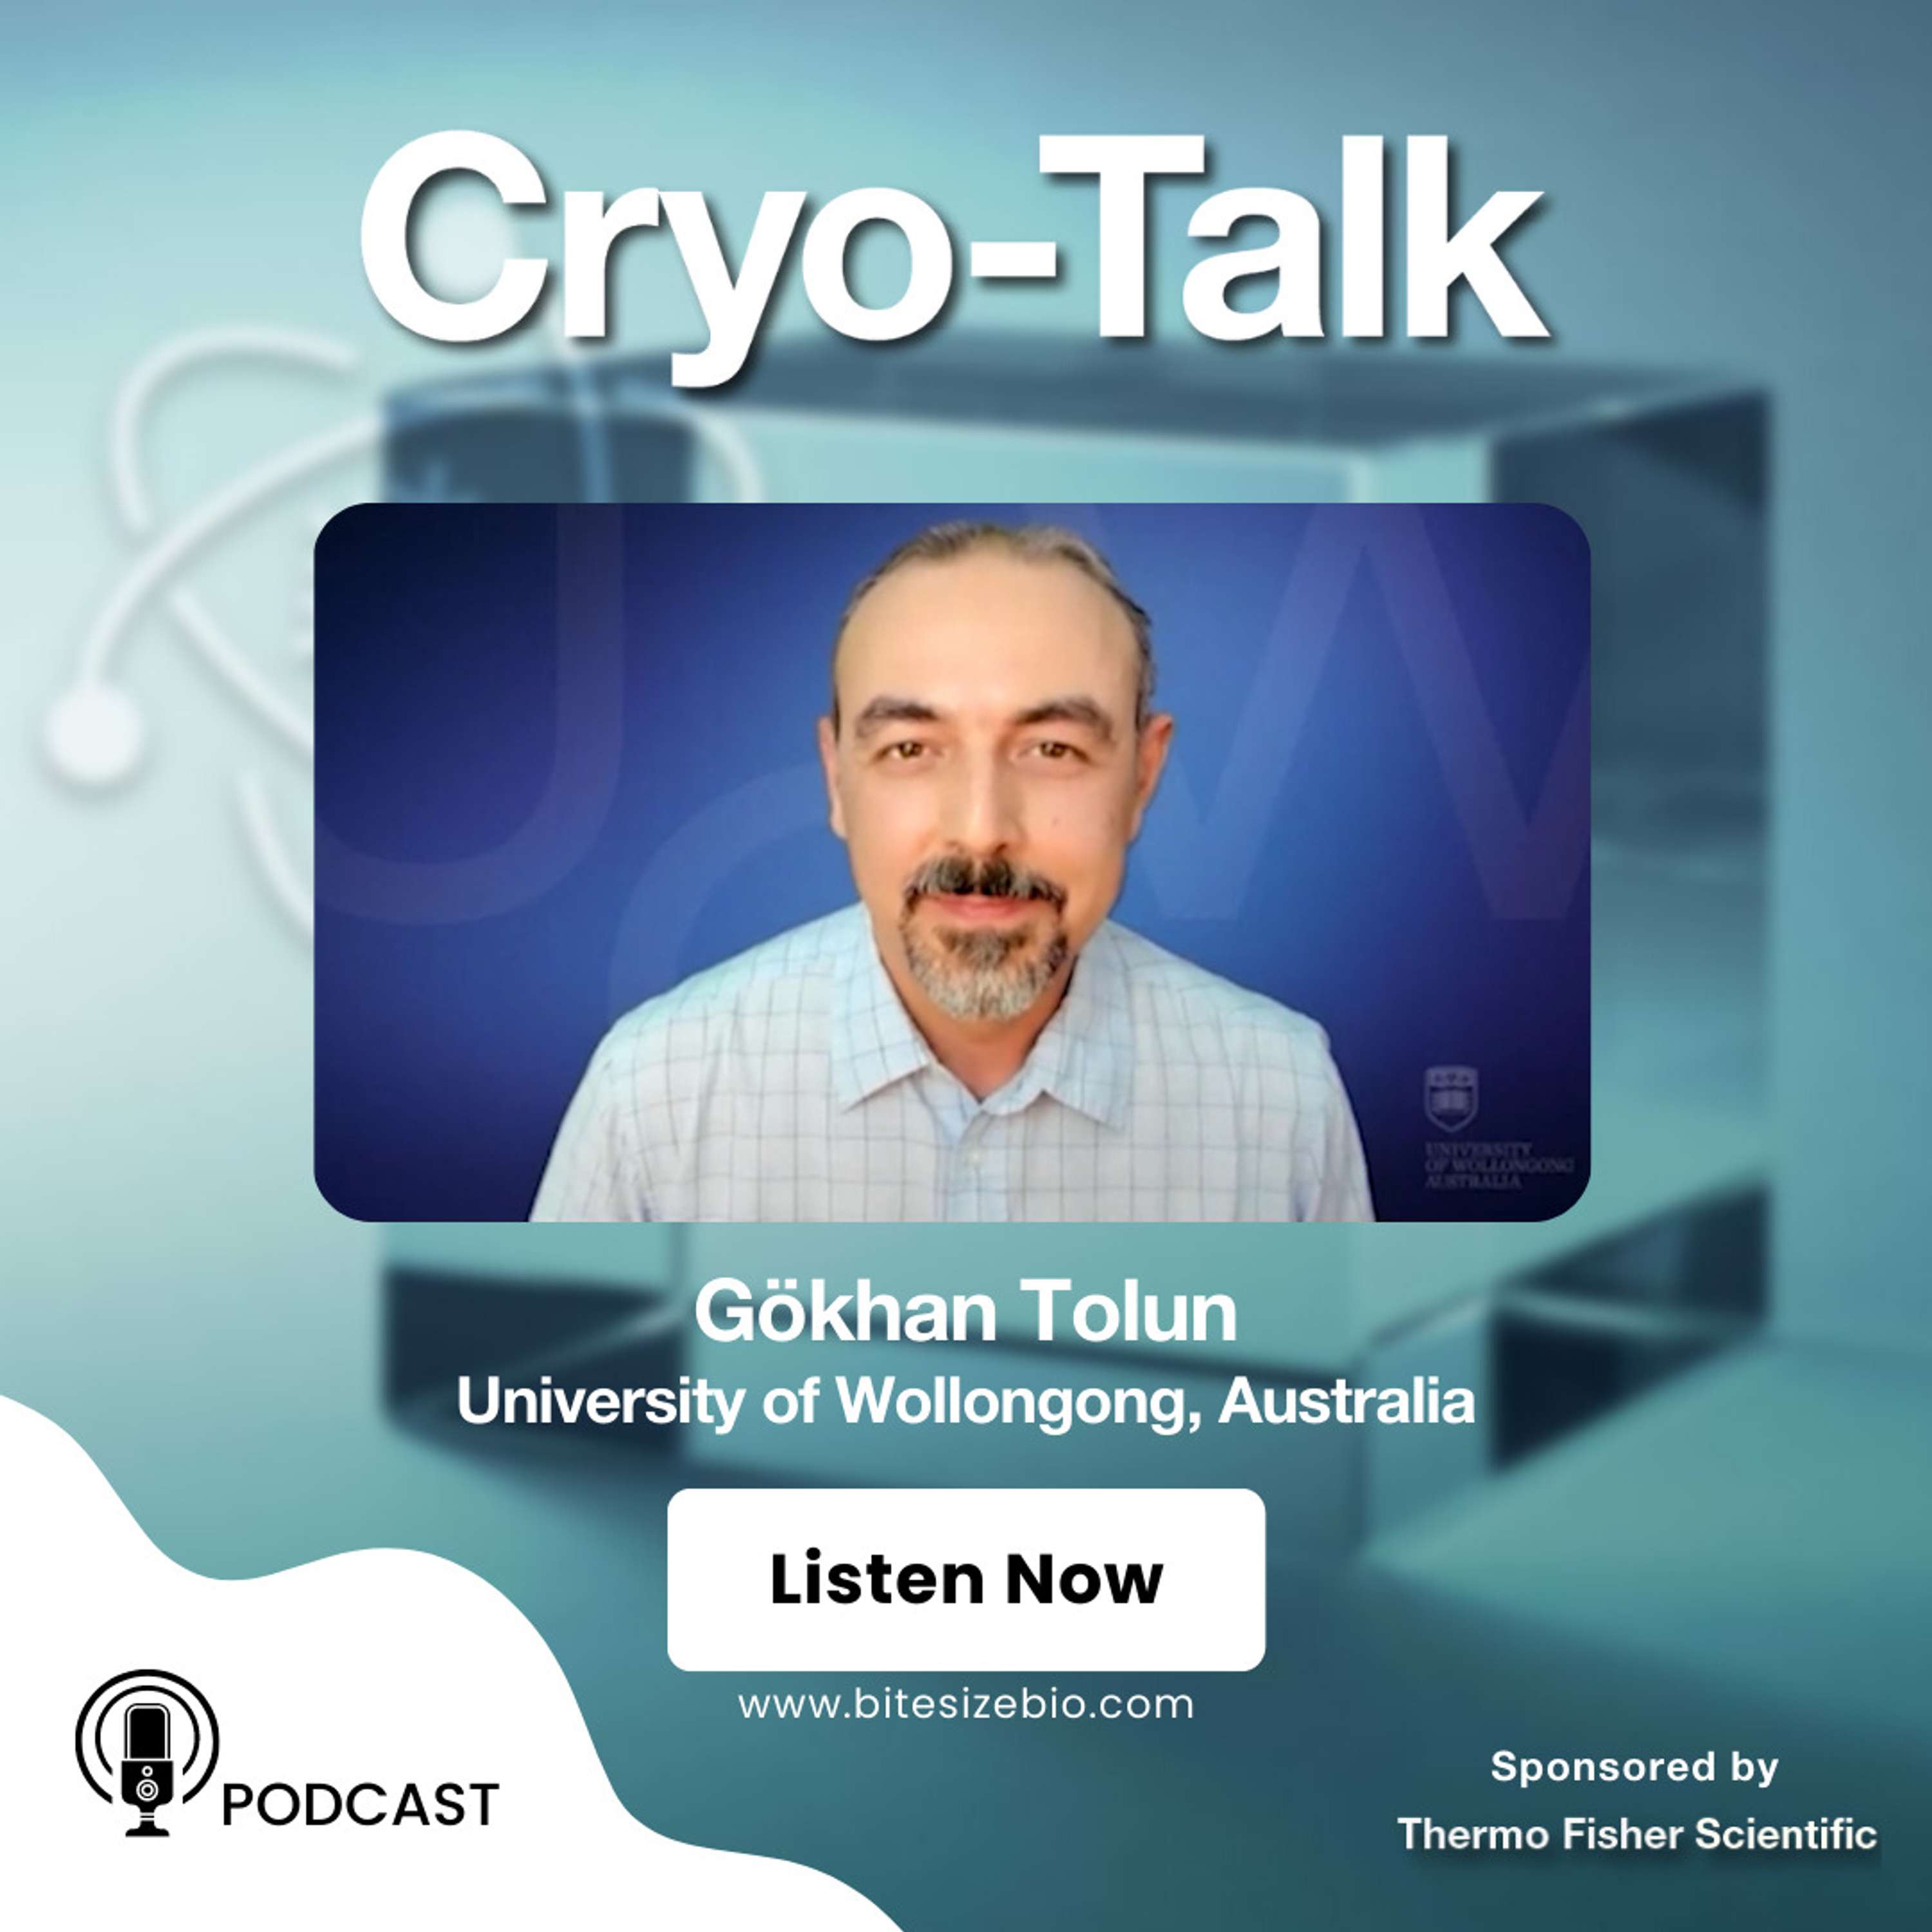 Cryo-Talk interviews Gökhan Tolun (University of Wollongong)